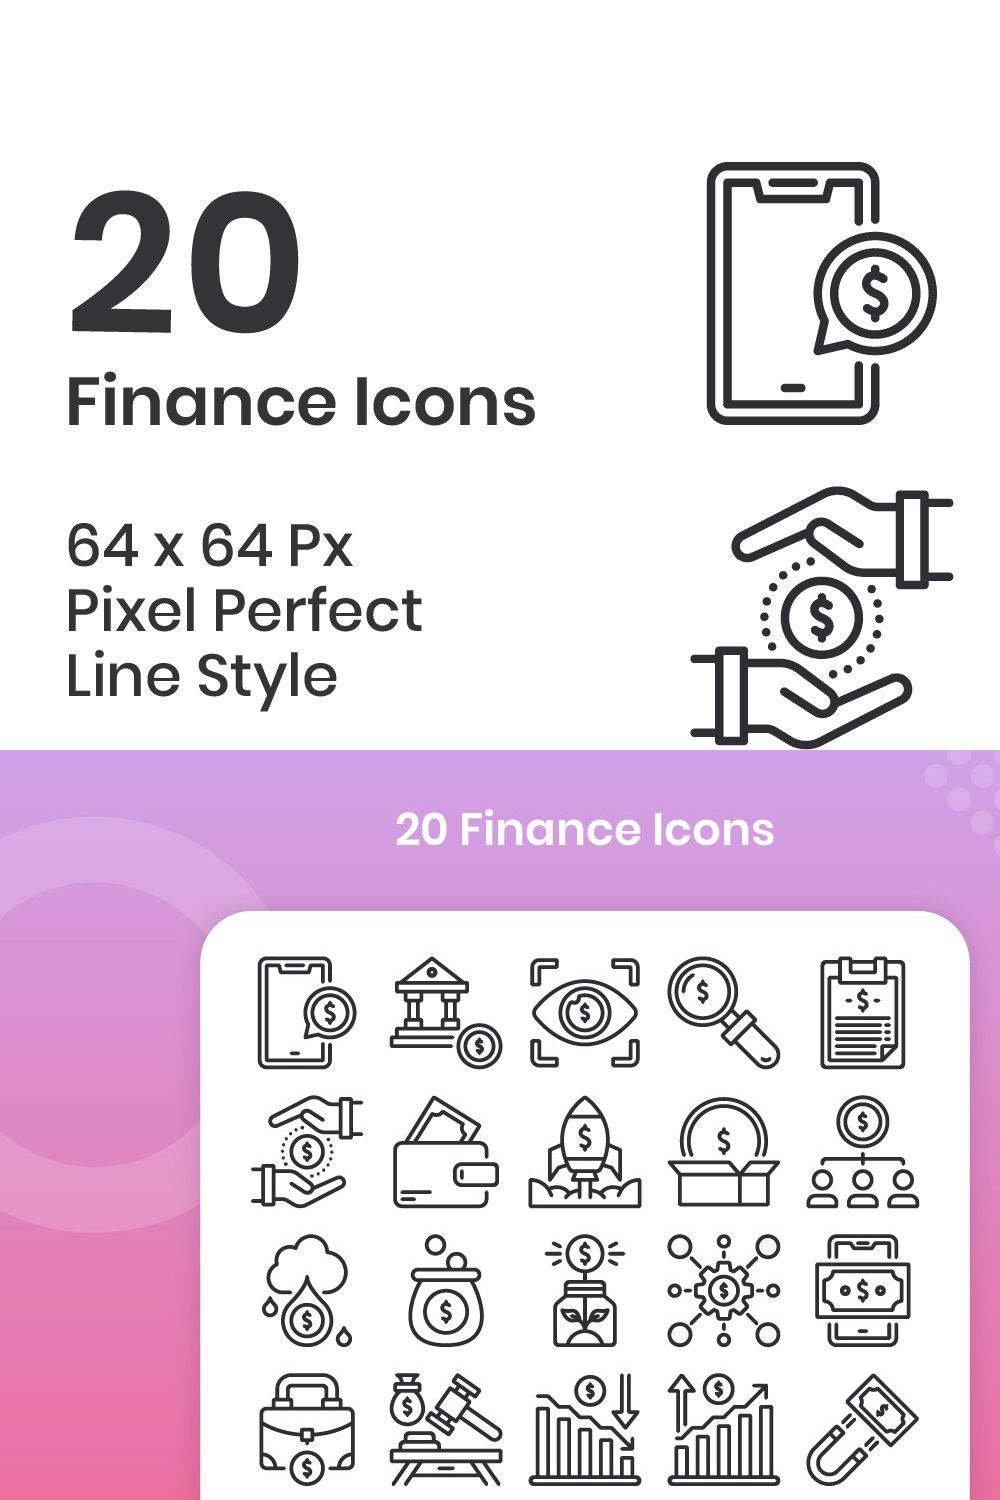 20 Finance - Line pinterest preview image.